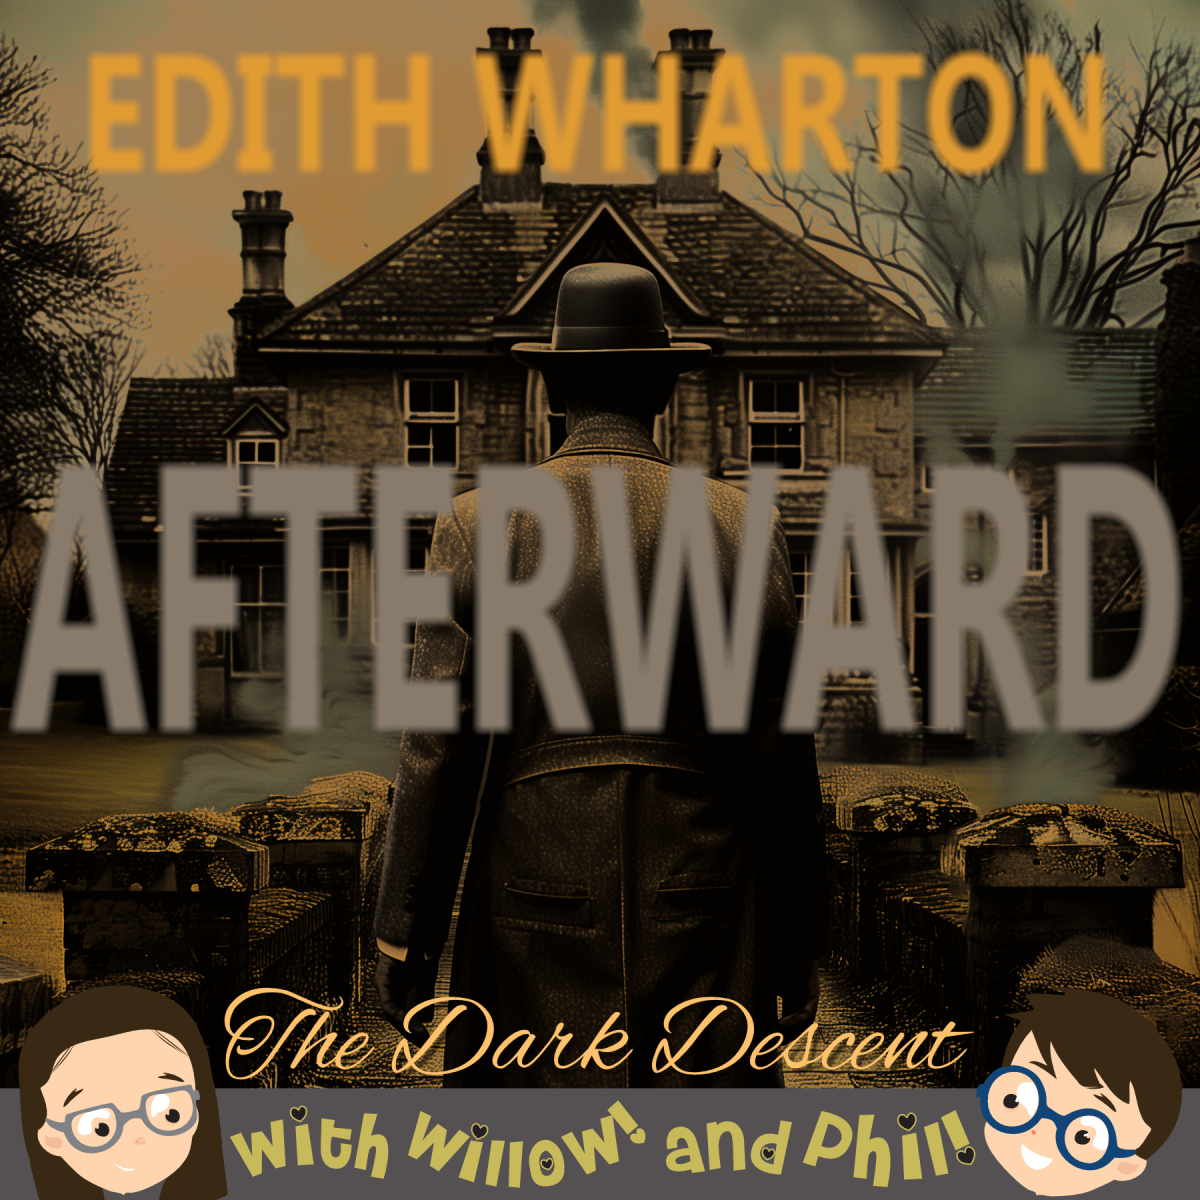 The Dark Descent – “Afterward” by Edith Wharton